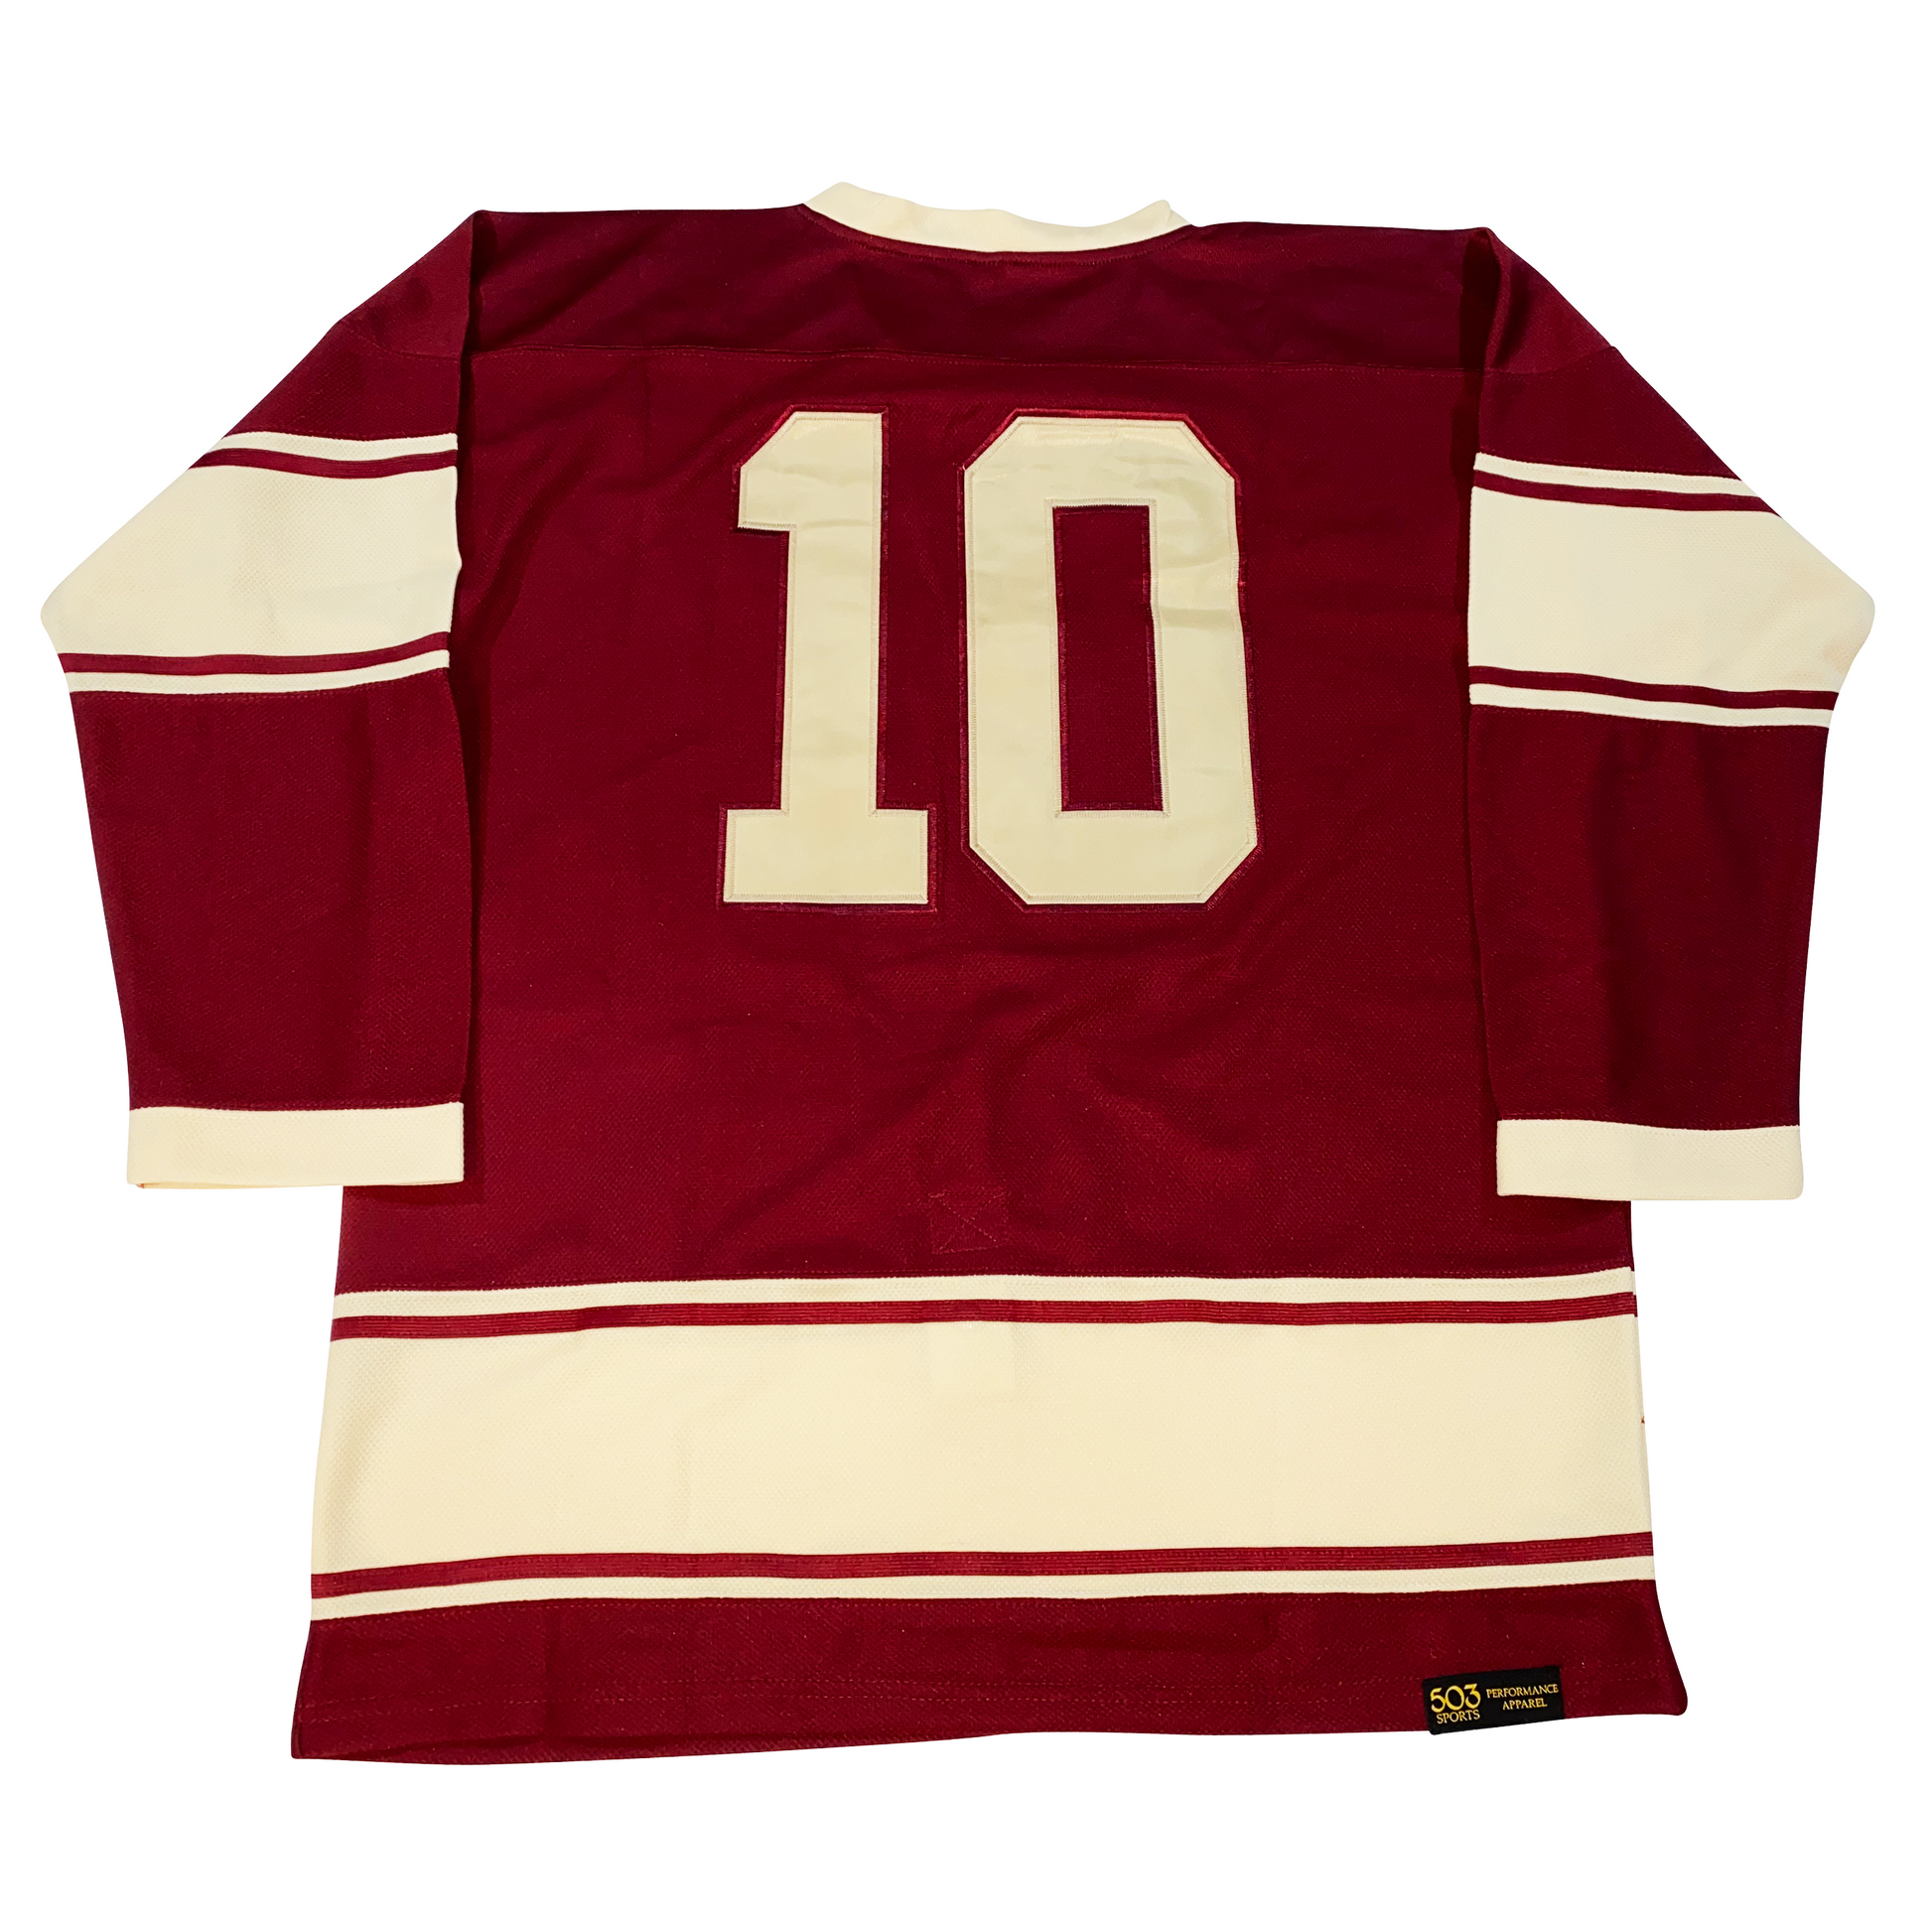 Vintage Montreal Maroons Defunct Ice Hockey Team T-Shirt